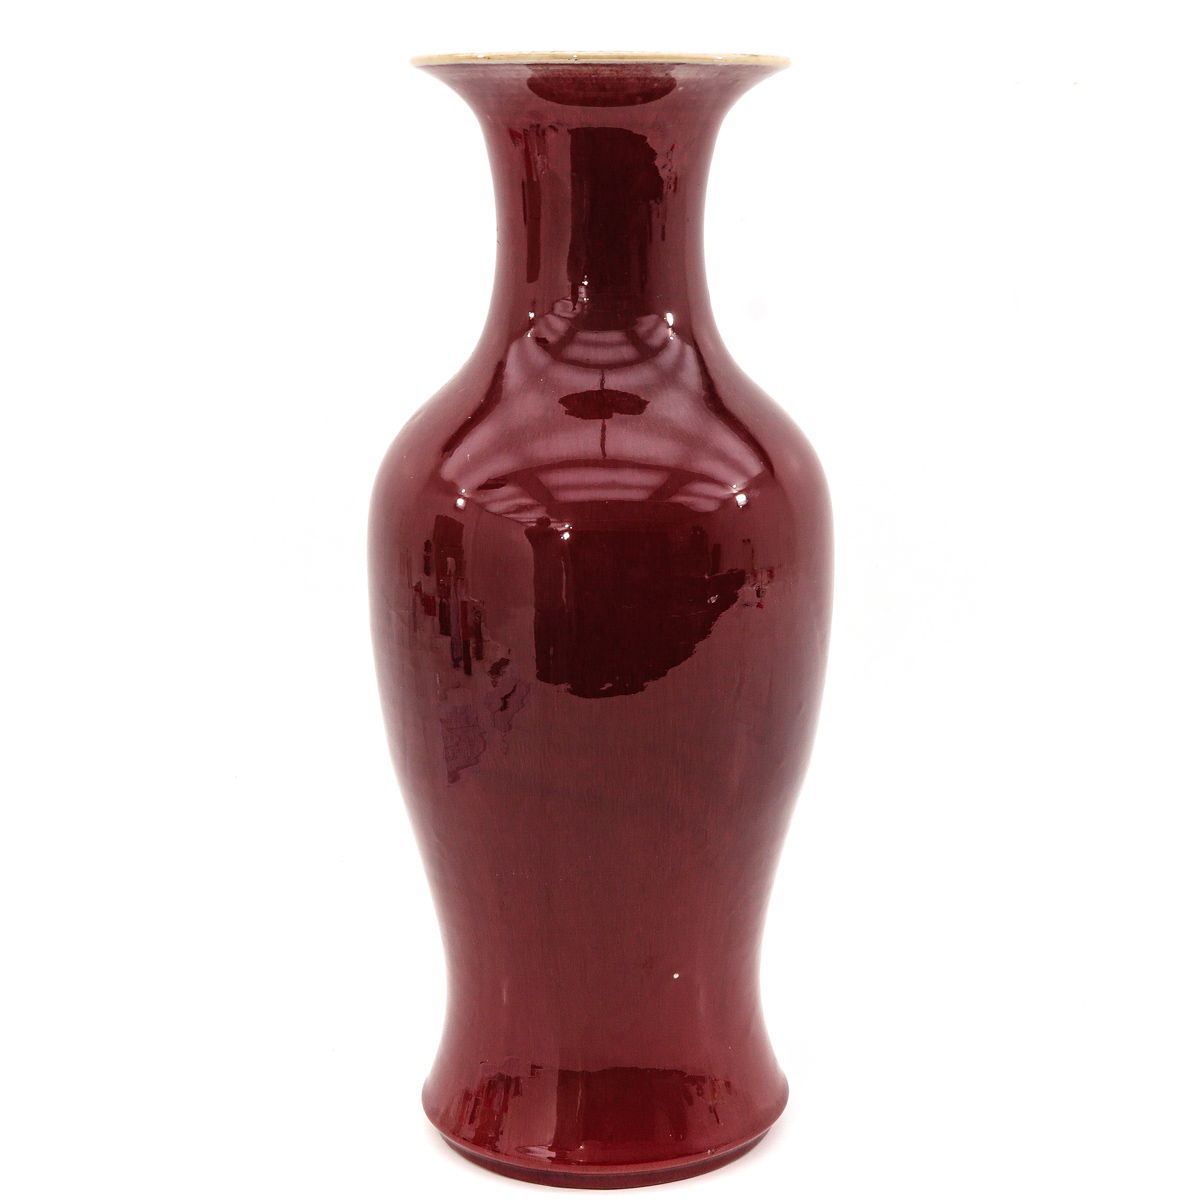 A Large Sang de Boeuf Vase - Image 2 of 8